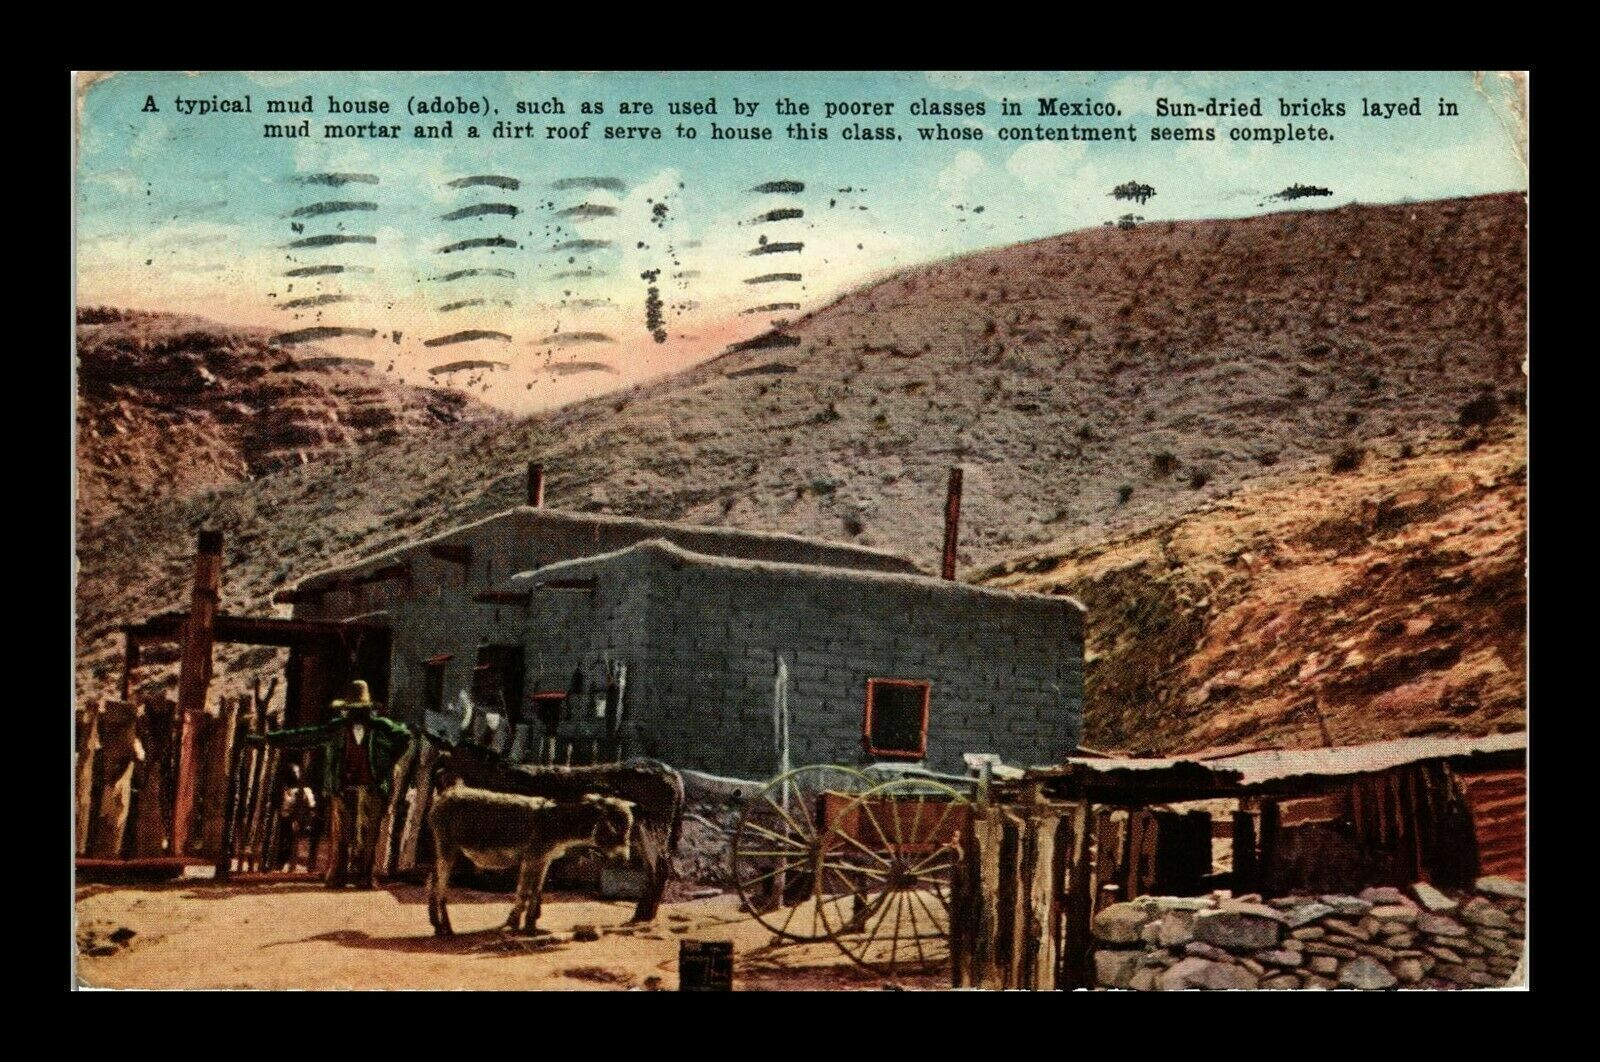 VINTAGE POSTCARD TYPICAL ADOBE MUD HOUSE BUILT WITH SUN-DRIED BRICKS TEXAS 1913